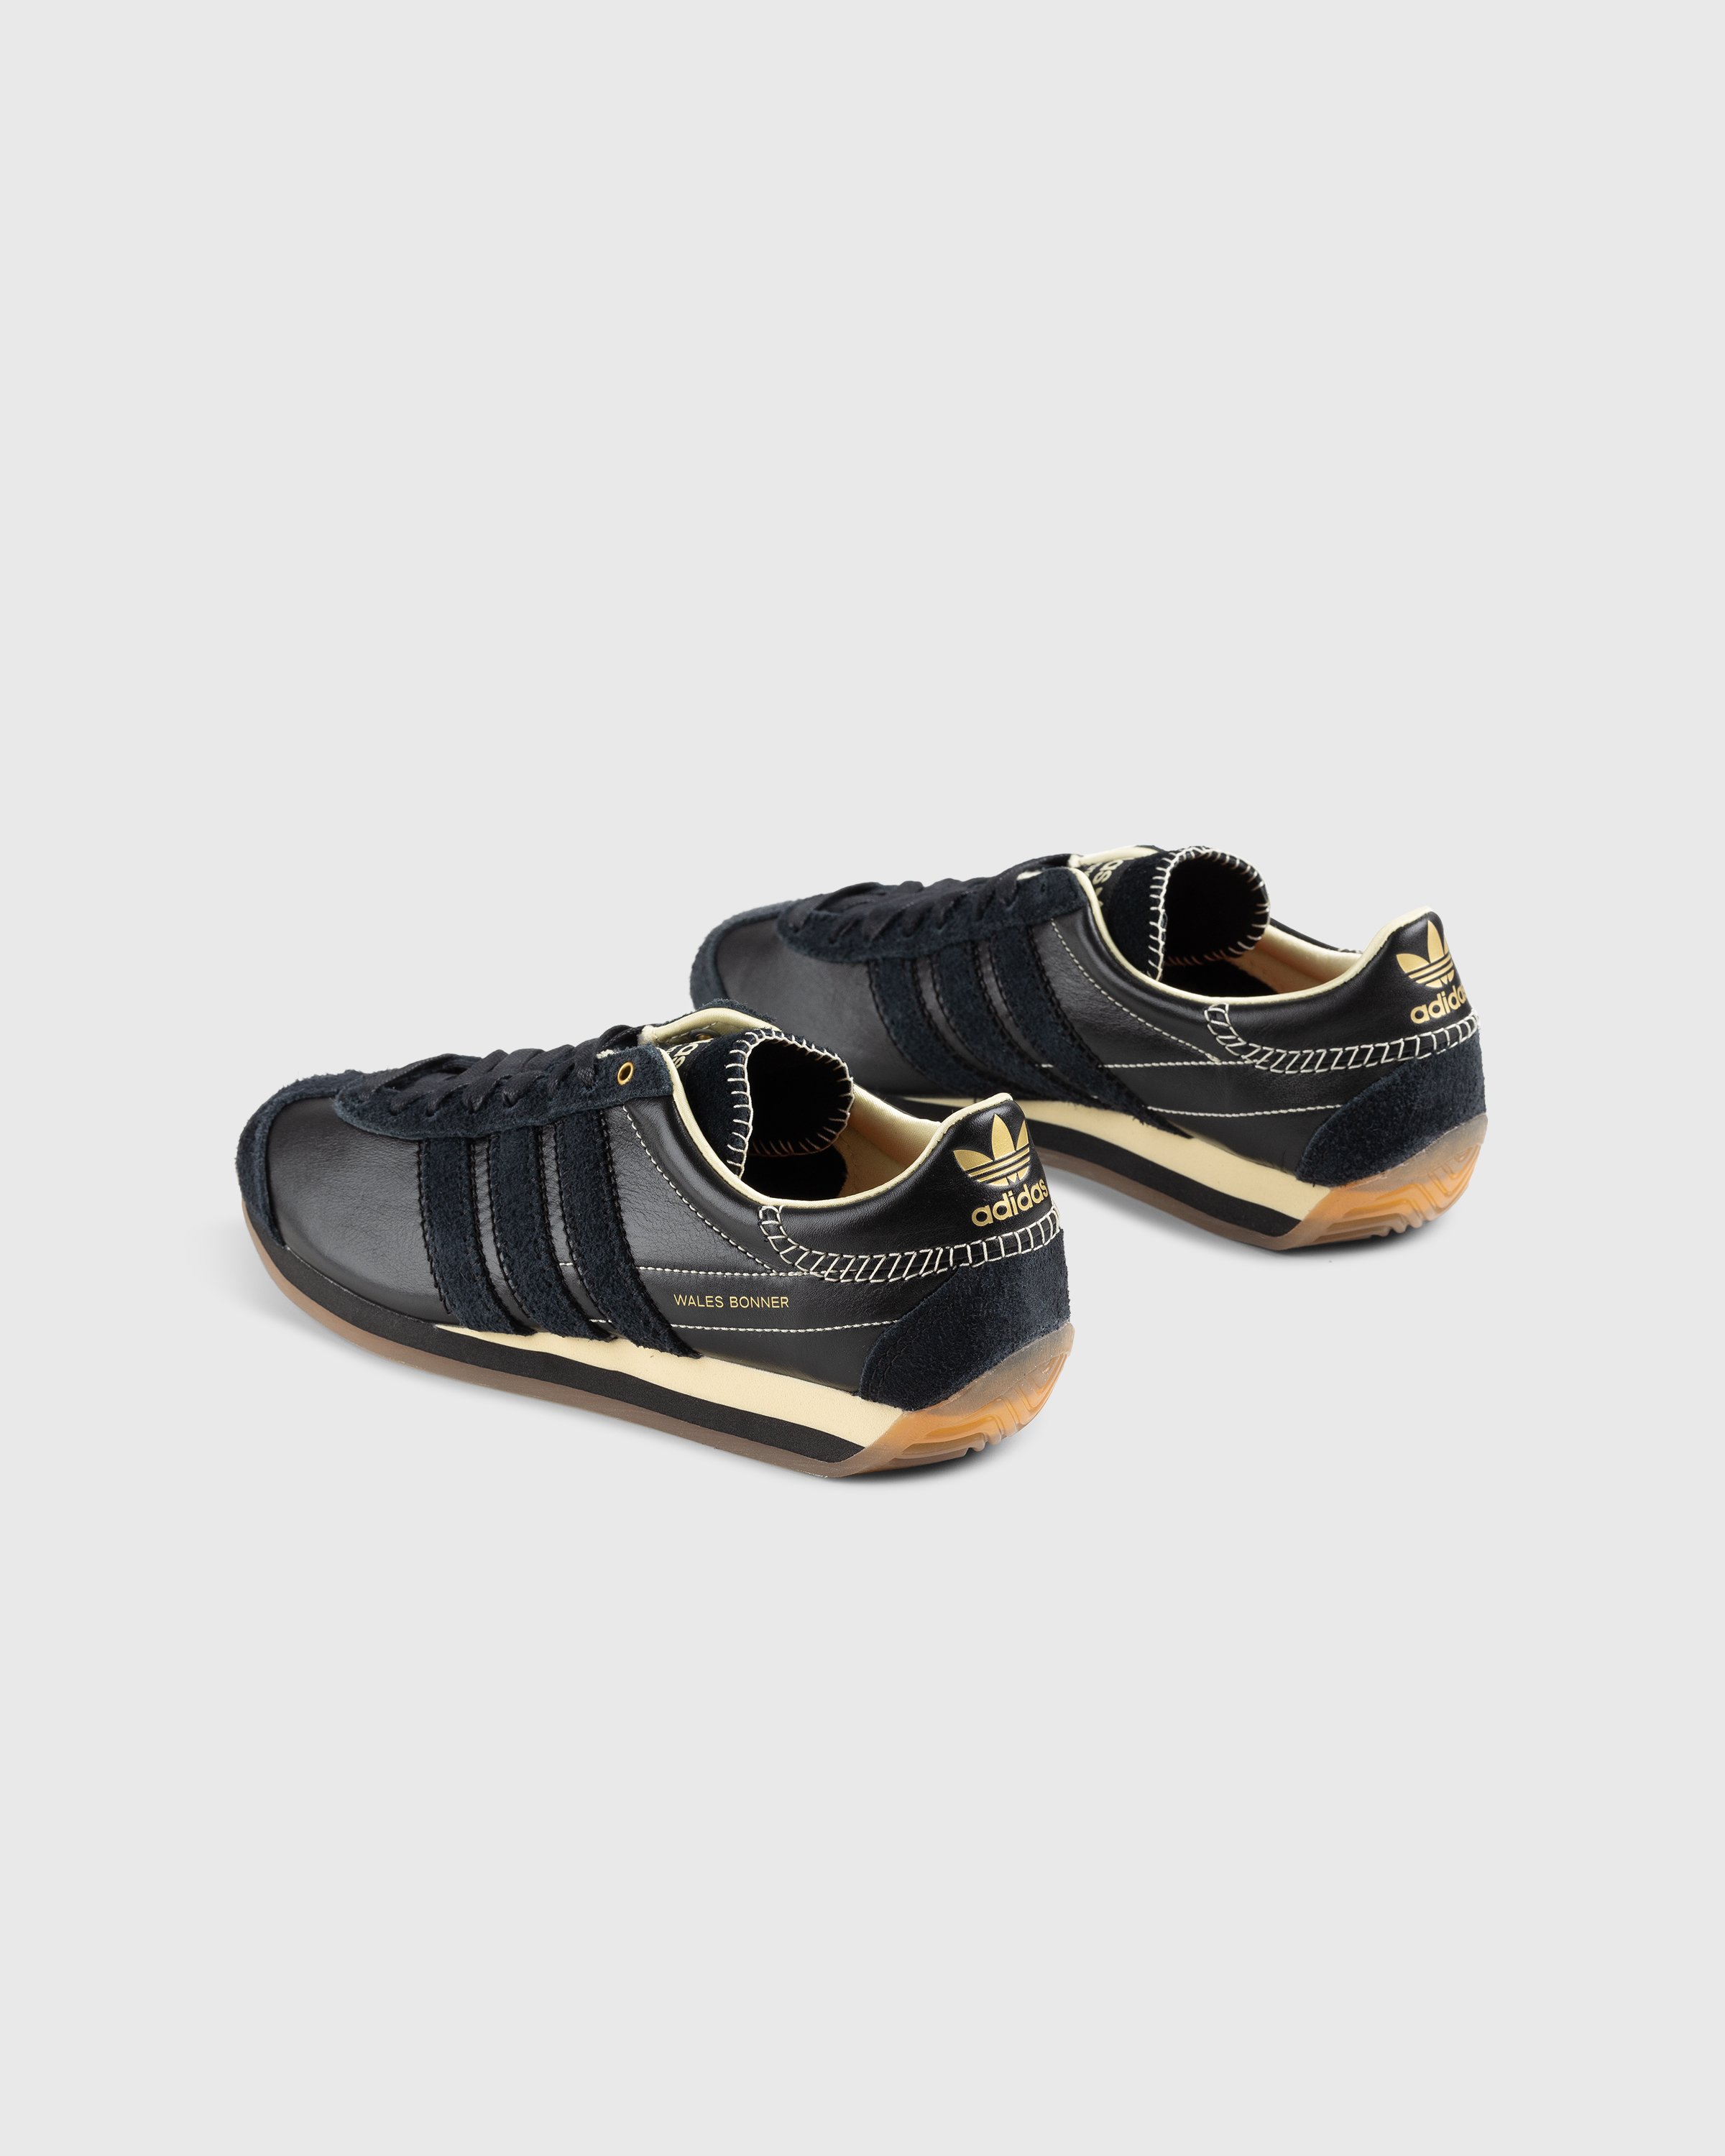 Adidas x Wales Bonner - WB Country Core Black/Core Black/Easy Yellow - Footwear - Black - Image 4